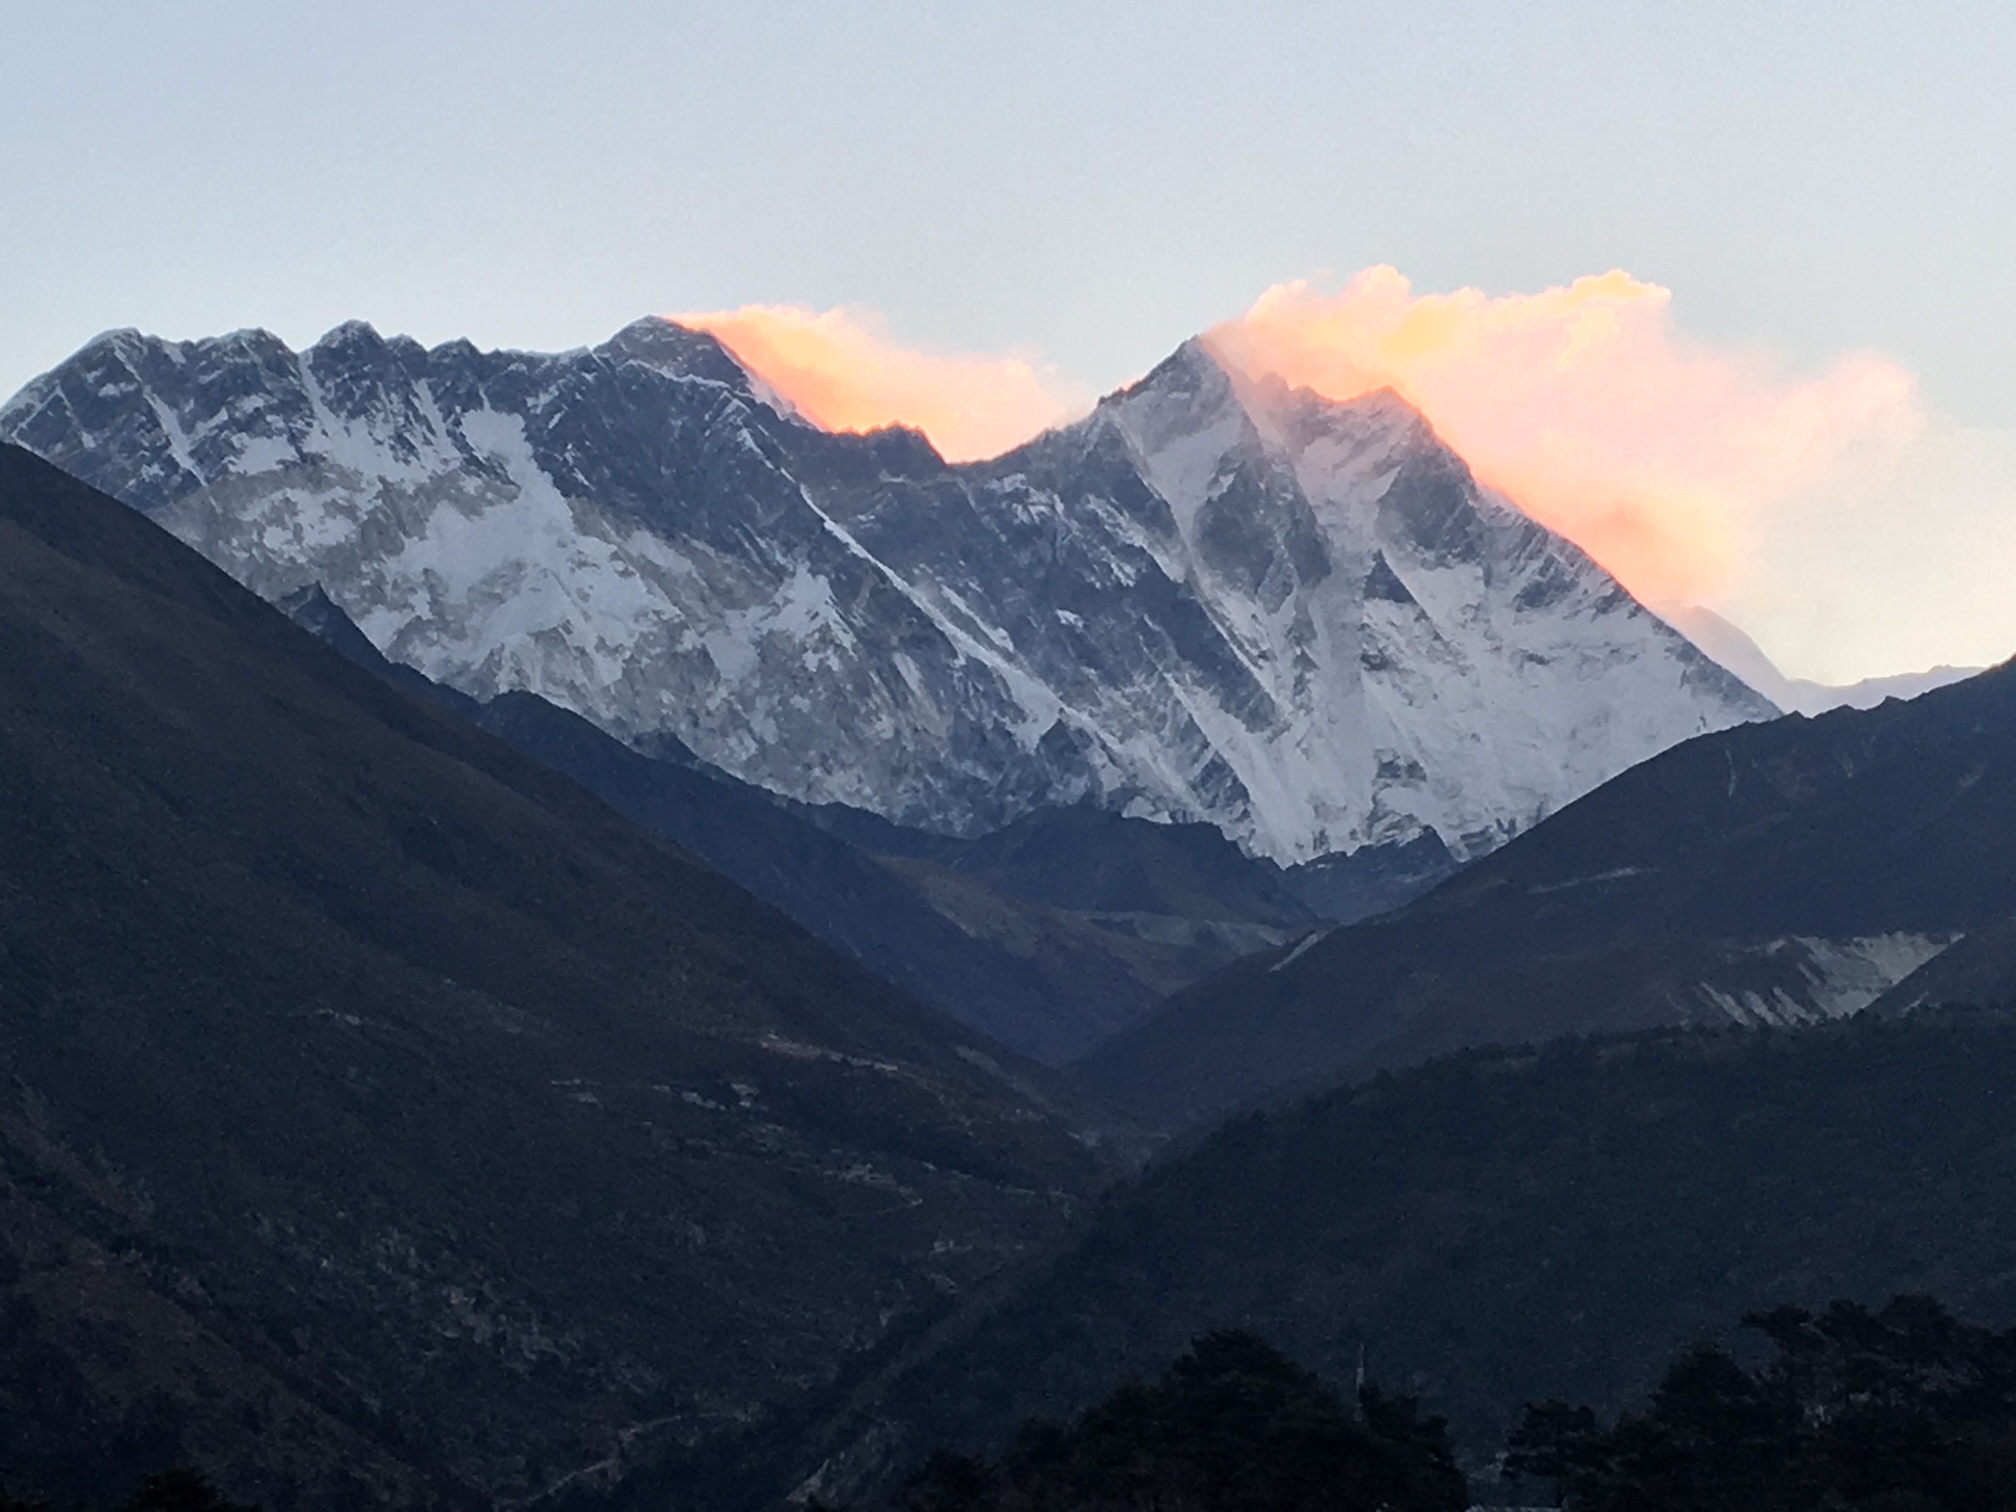 Mount Everest from Tengbouche